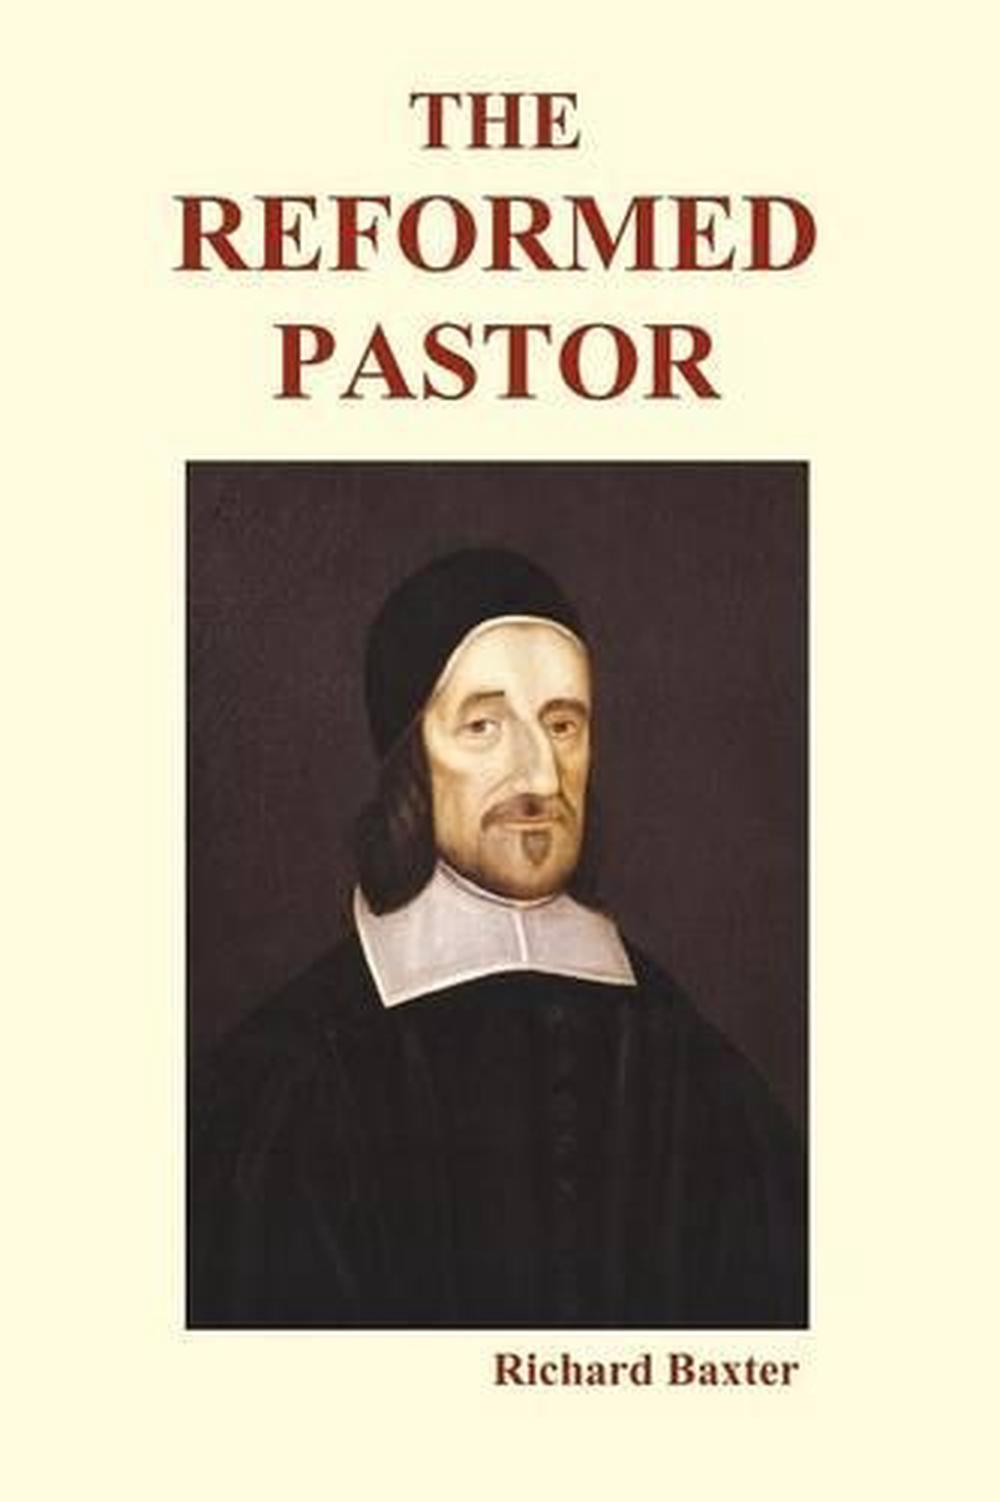 Reformed Pastor (Paperback) by Richard Baxter (English) Paperback Book ...